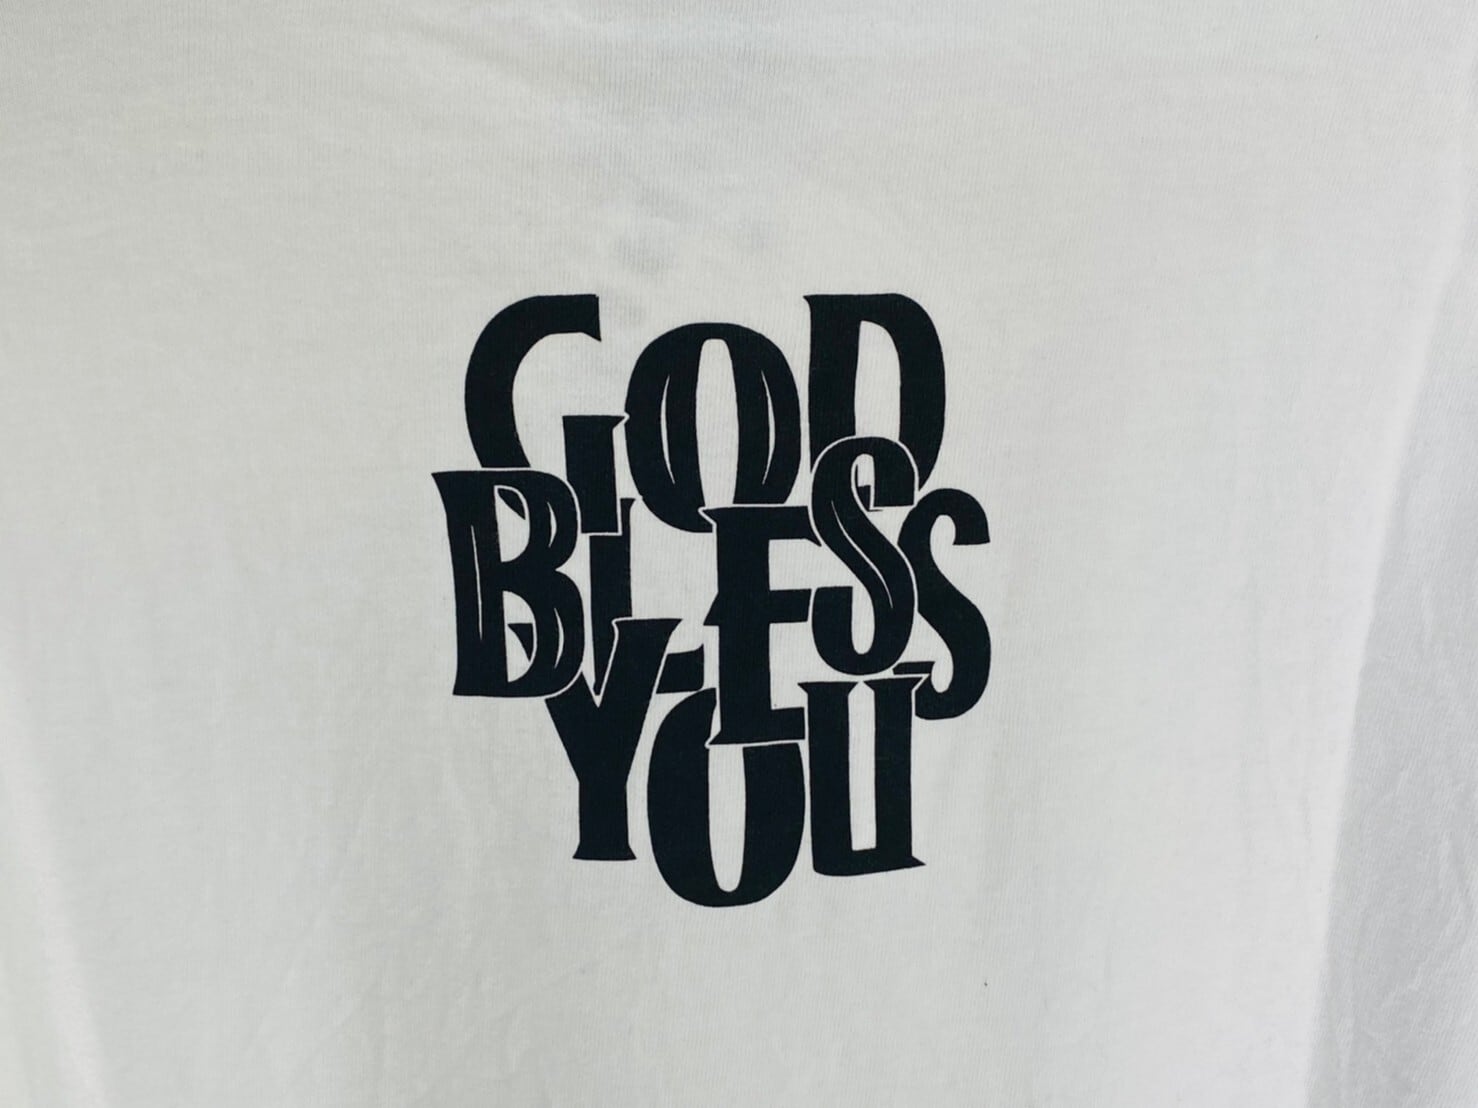 god bless you L/Sシャツ Lサイズ